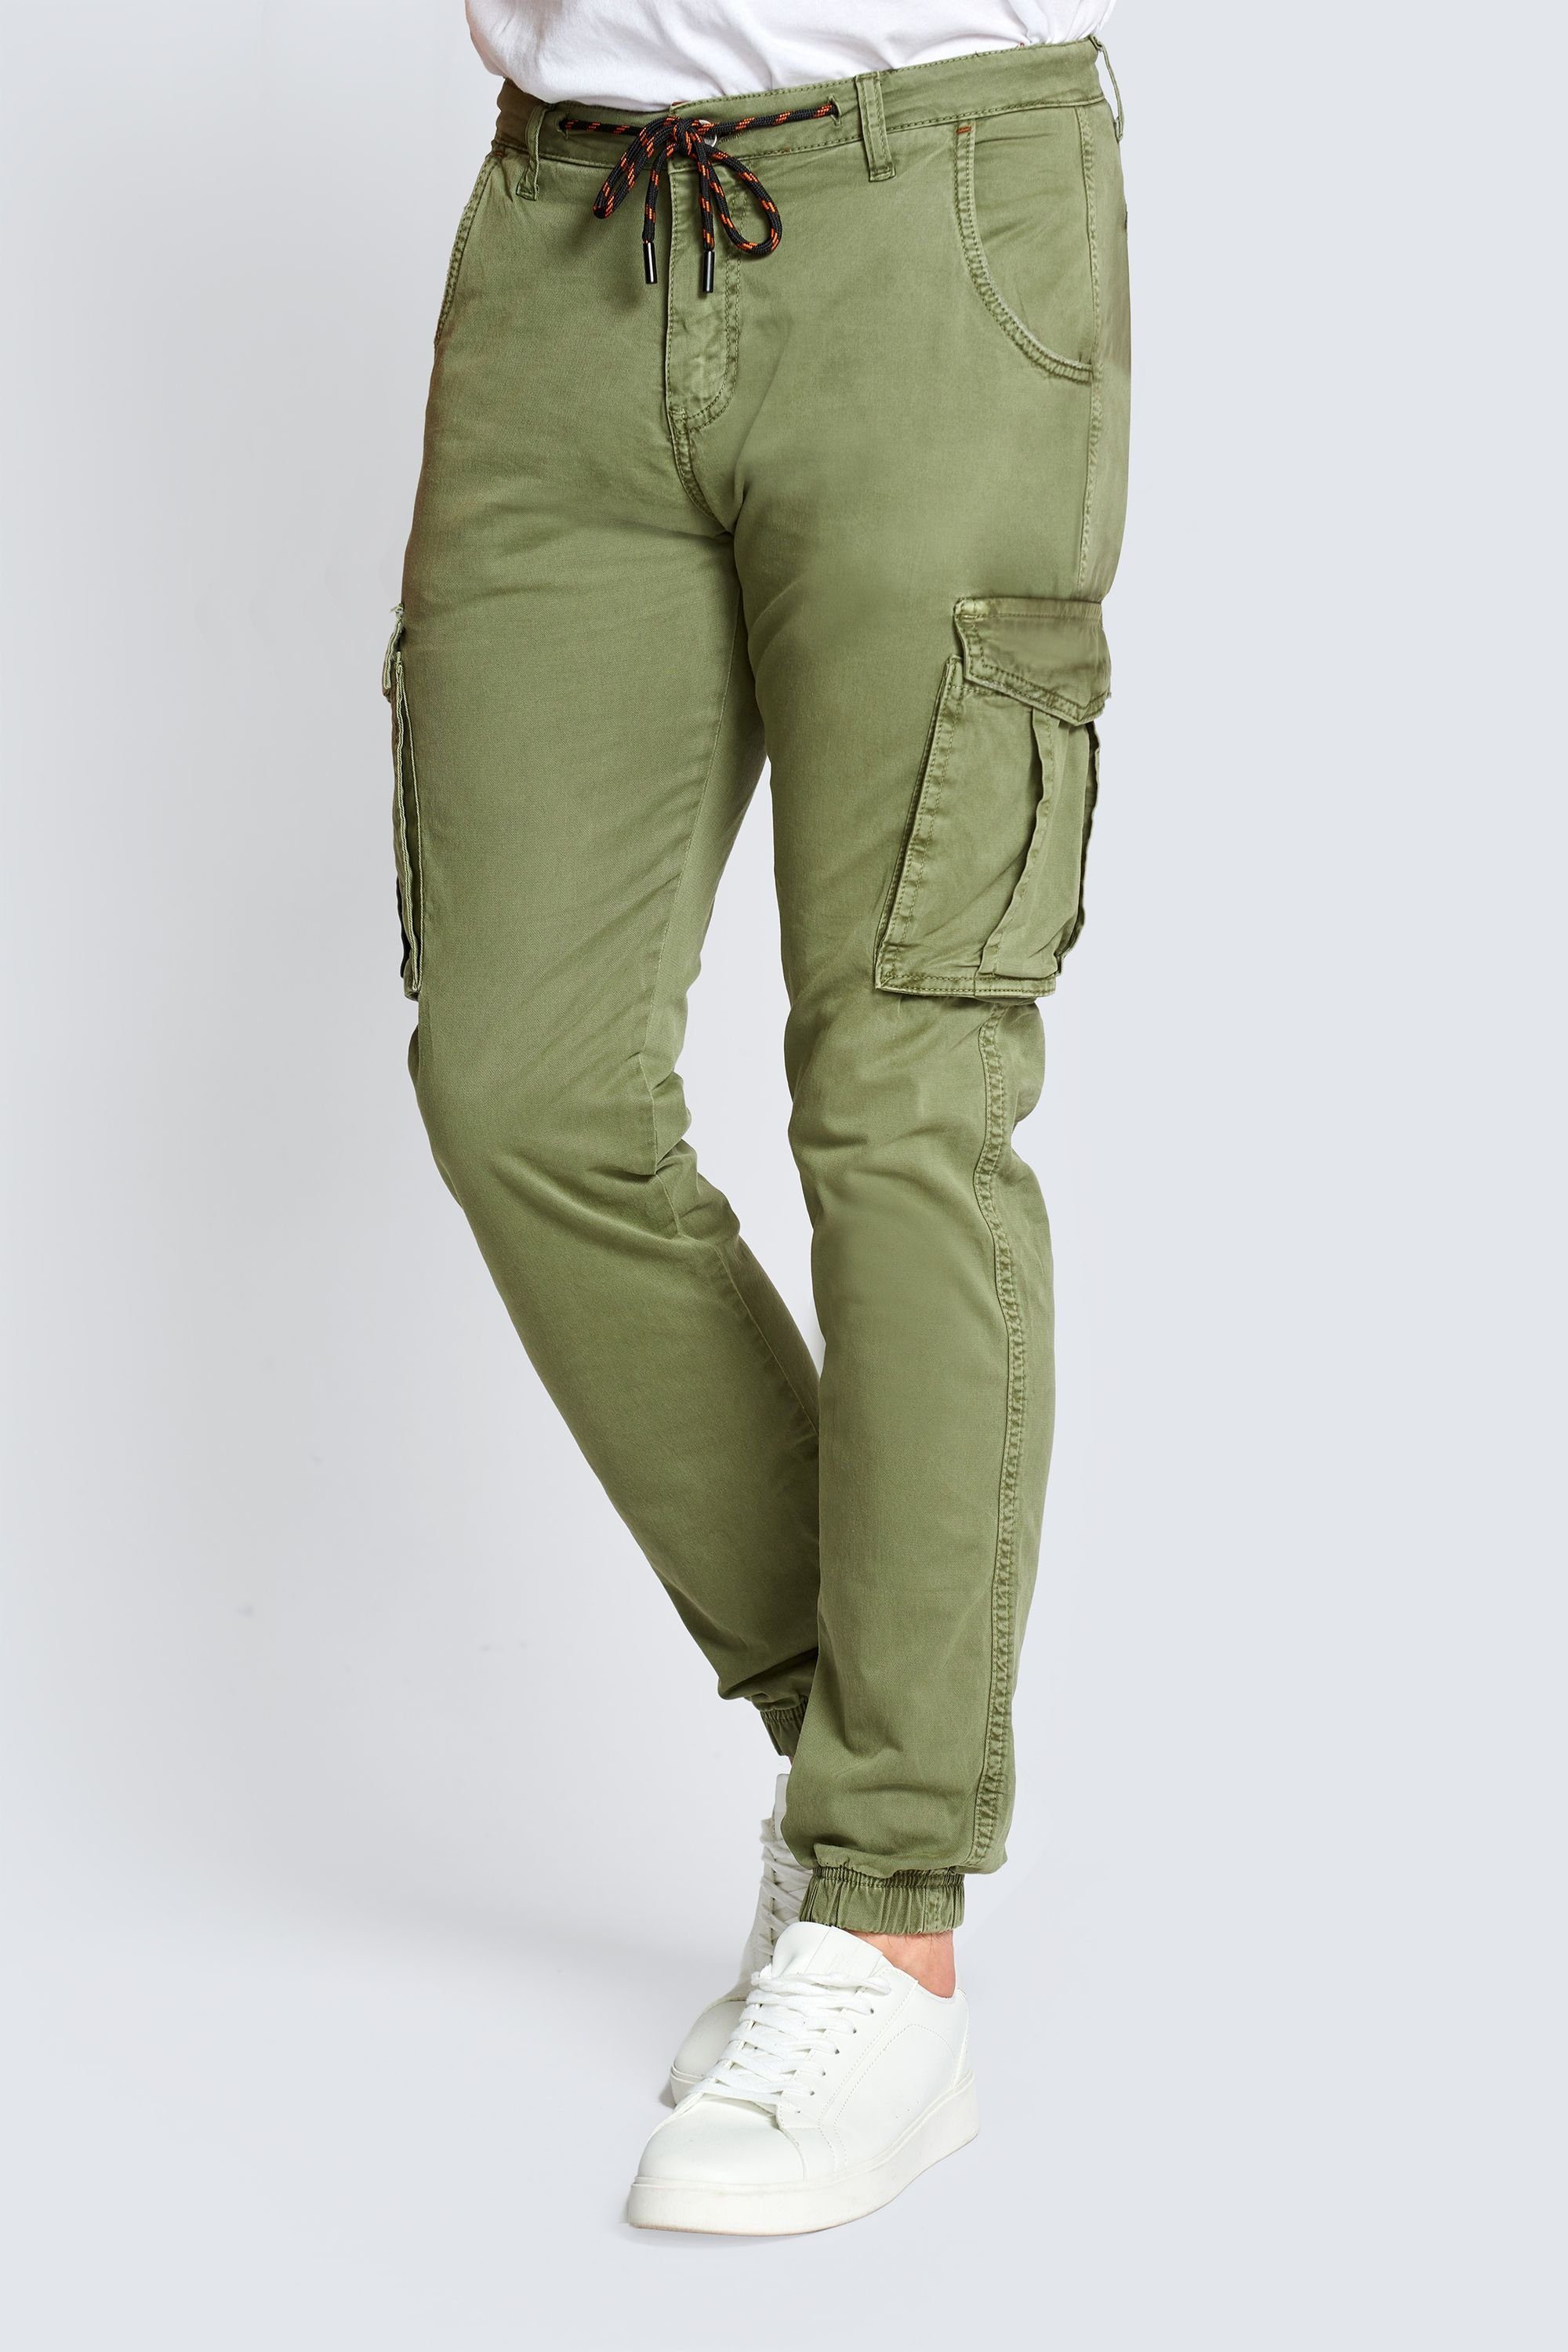 Zhrill 5-Pocket-Jeans Cargohose MICHA Olive angenehmer Tragekomfort